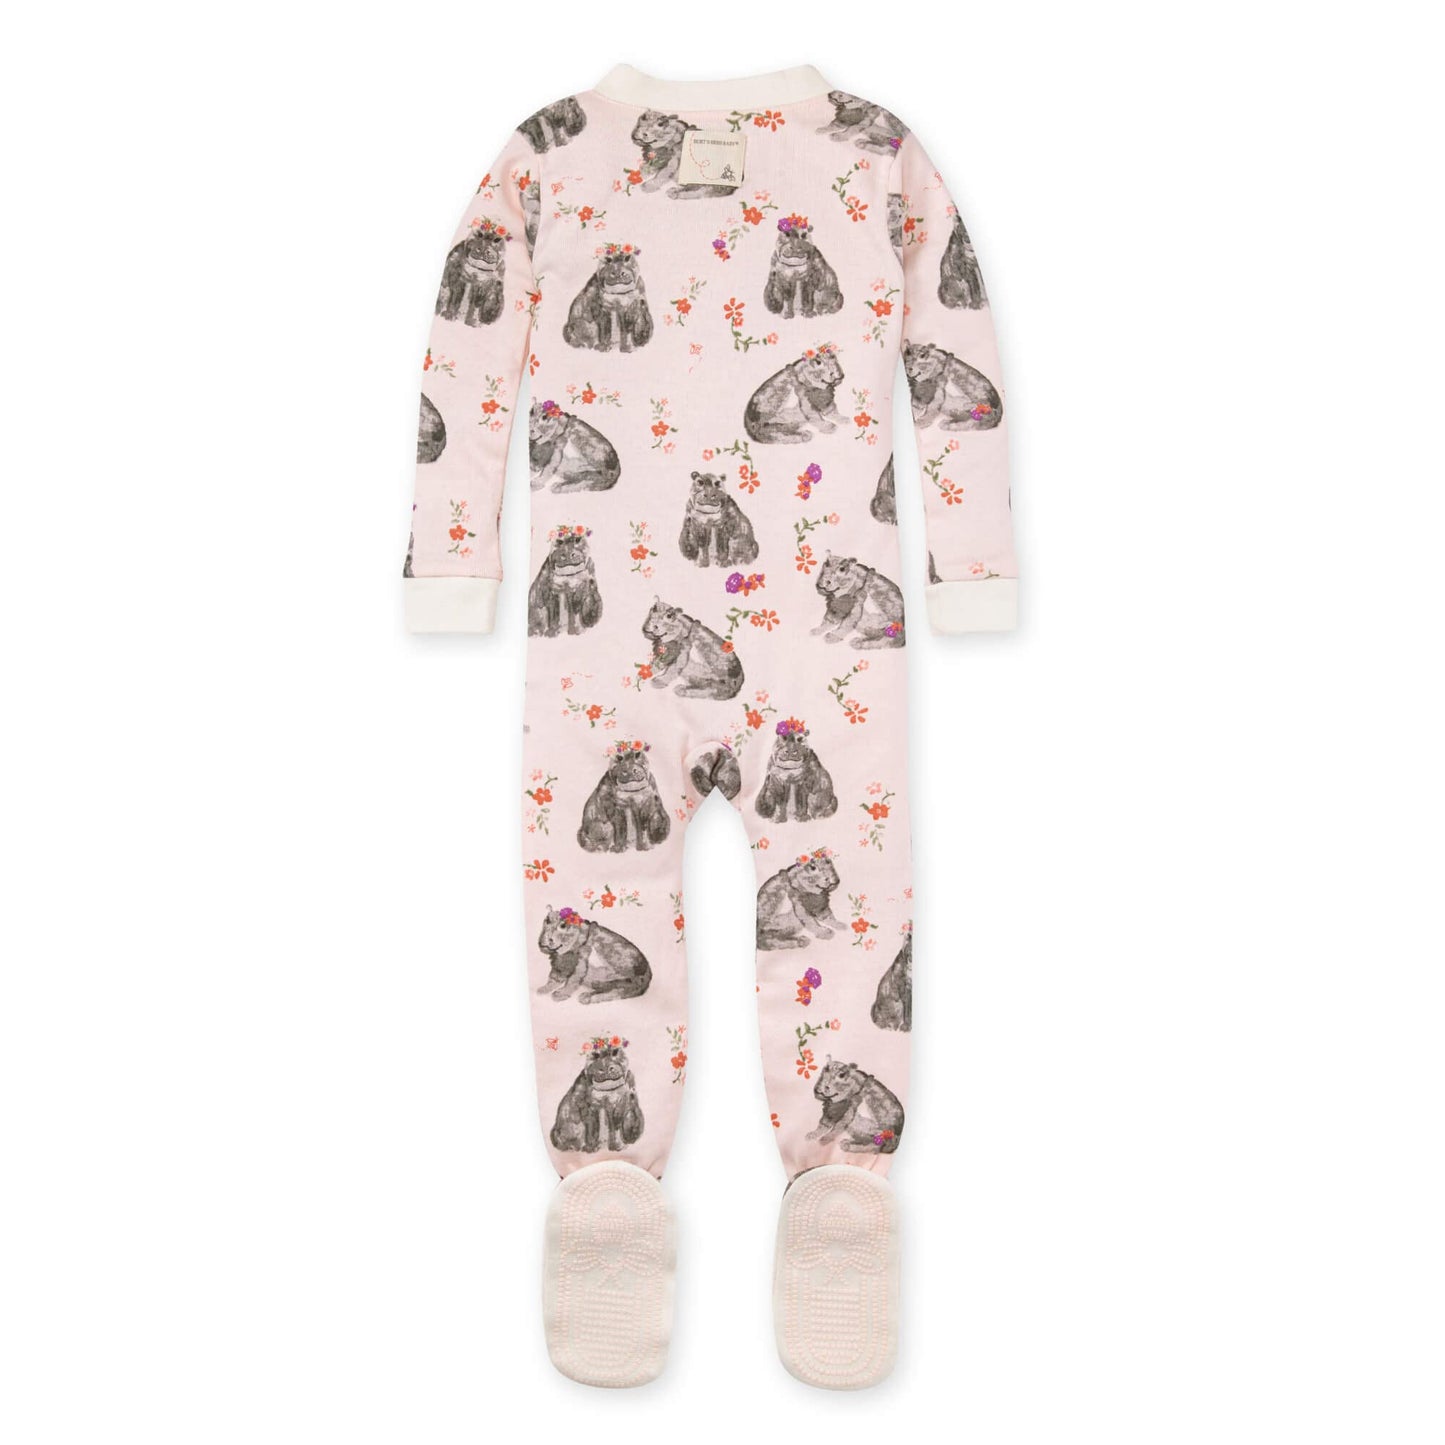 Burt's Bees Baby Baby Girls' Sleeper Pajamas, Zip Front Non-slip Footed Sleeper Pjs, 100% Organic Cotton (12 Months)